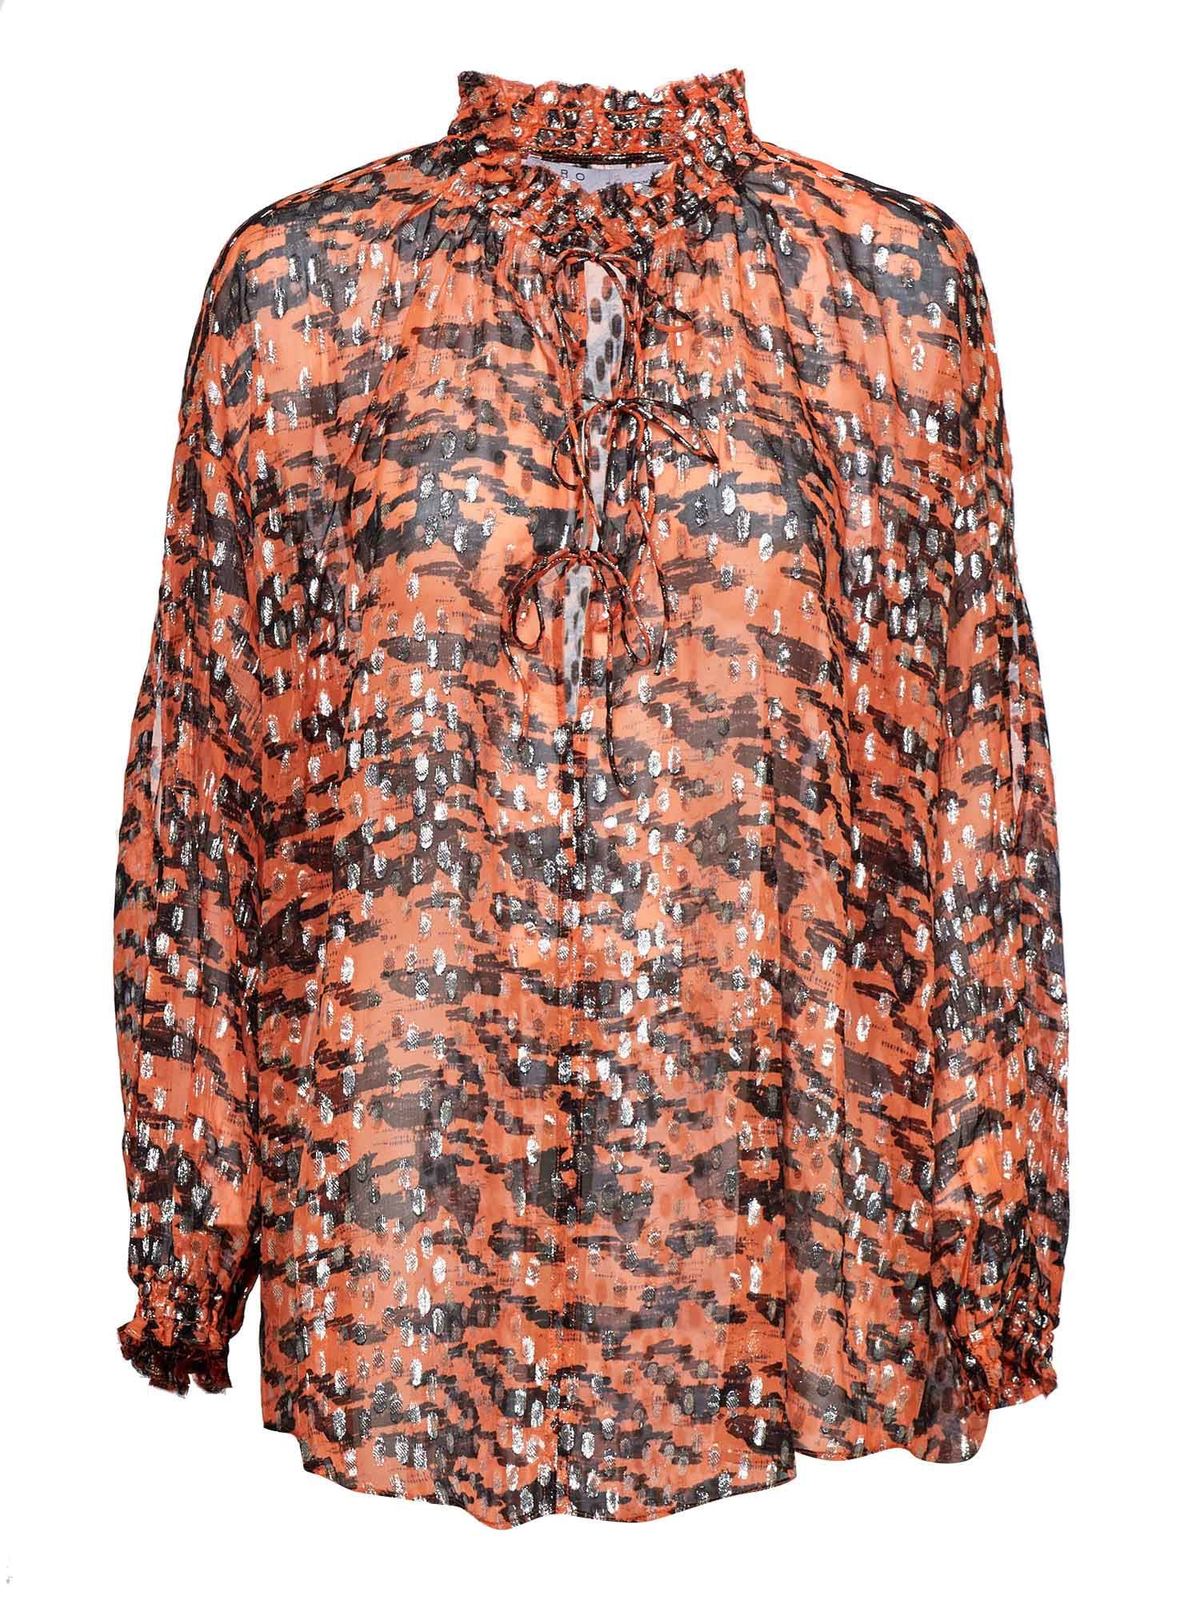 Split Maxim Belegering Blouses Iro - Sella blouse - WM16SELLA17 | Shop online at iKRIX